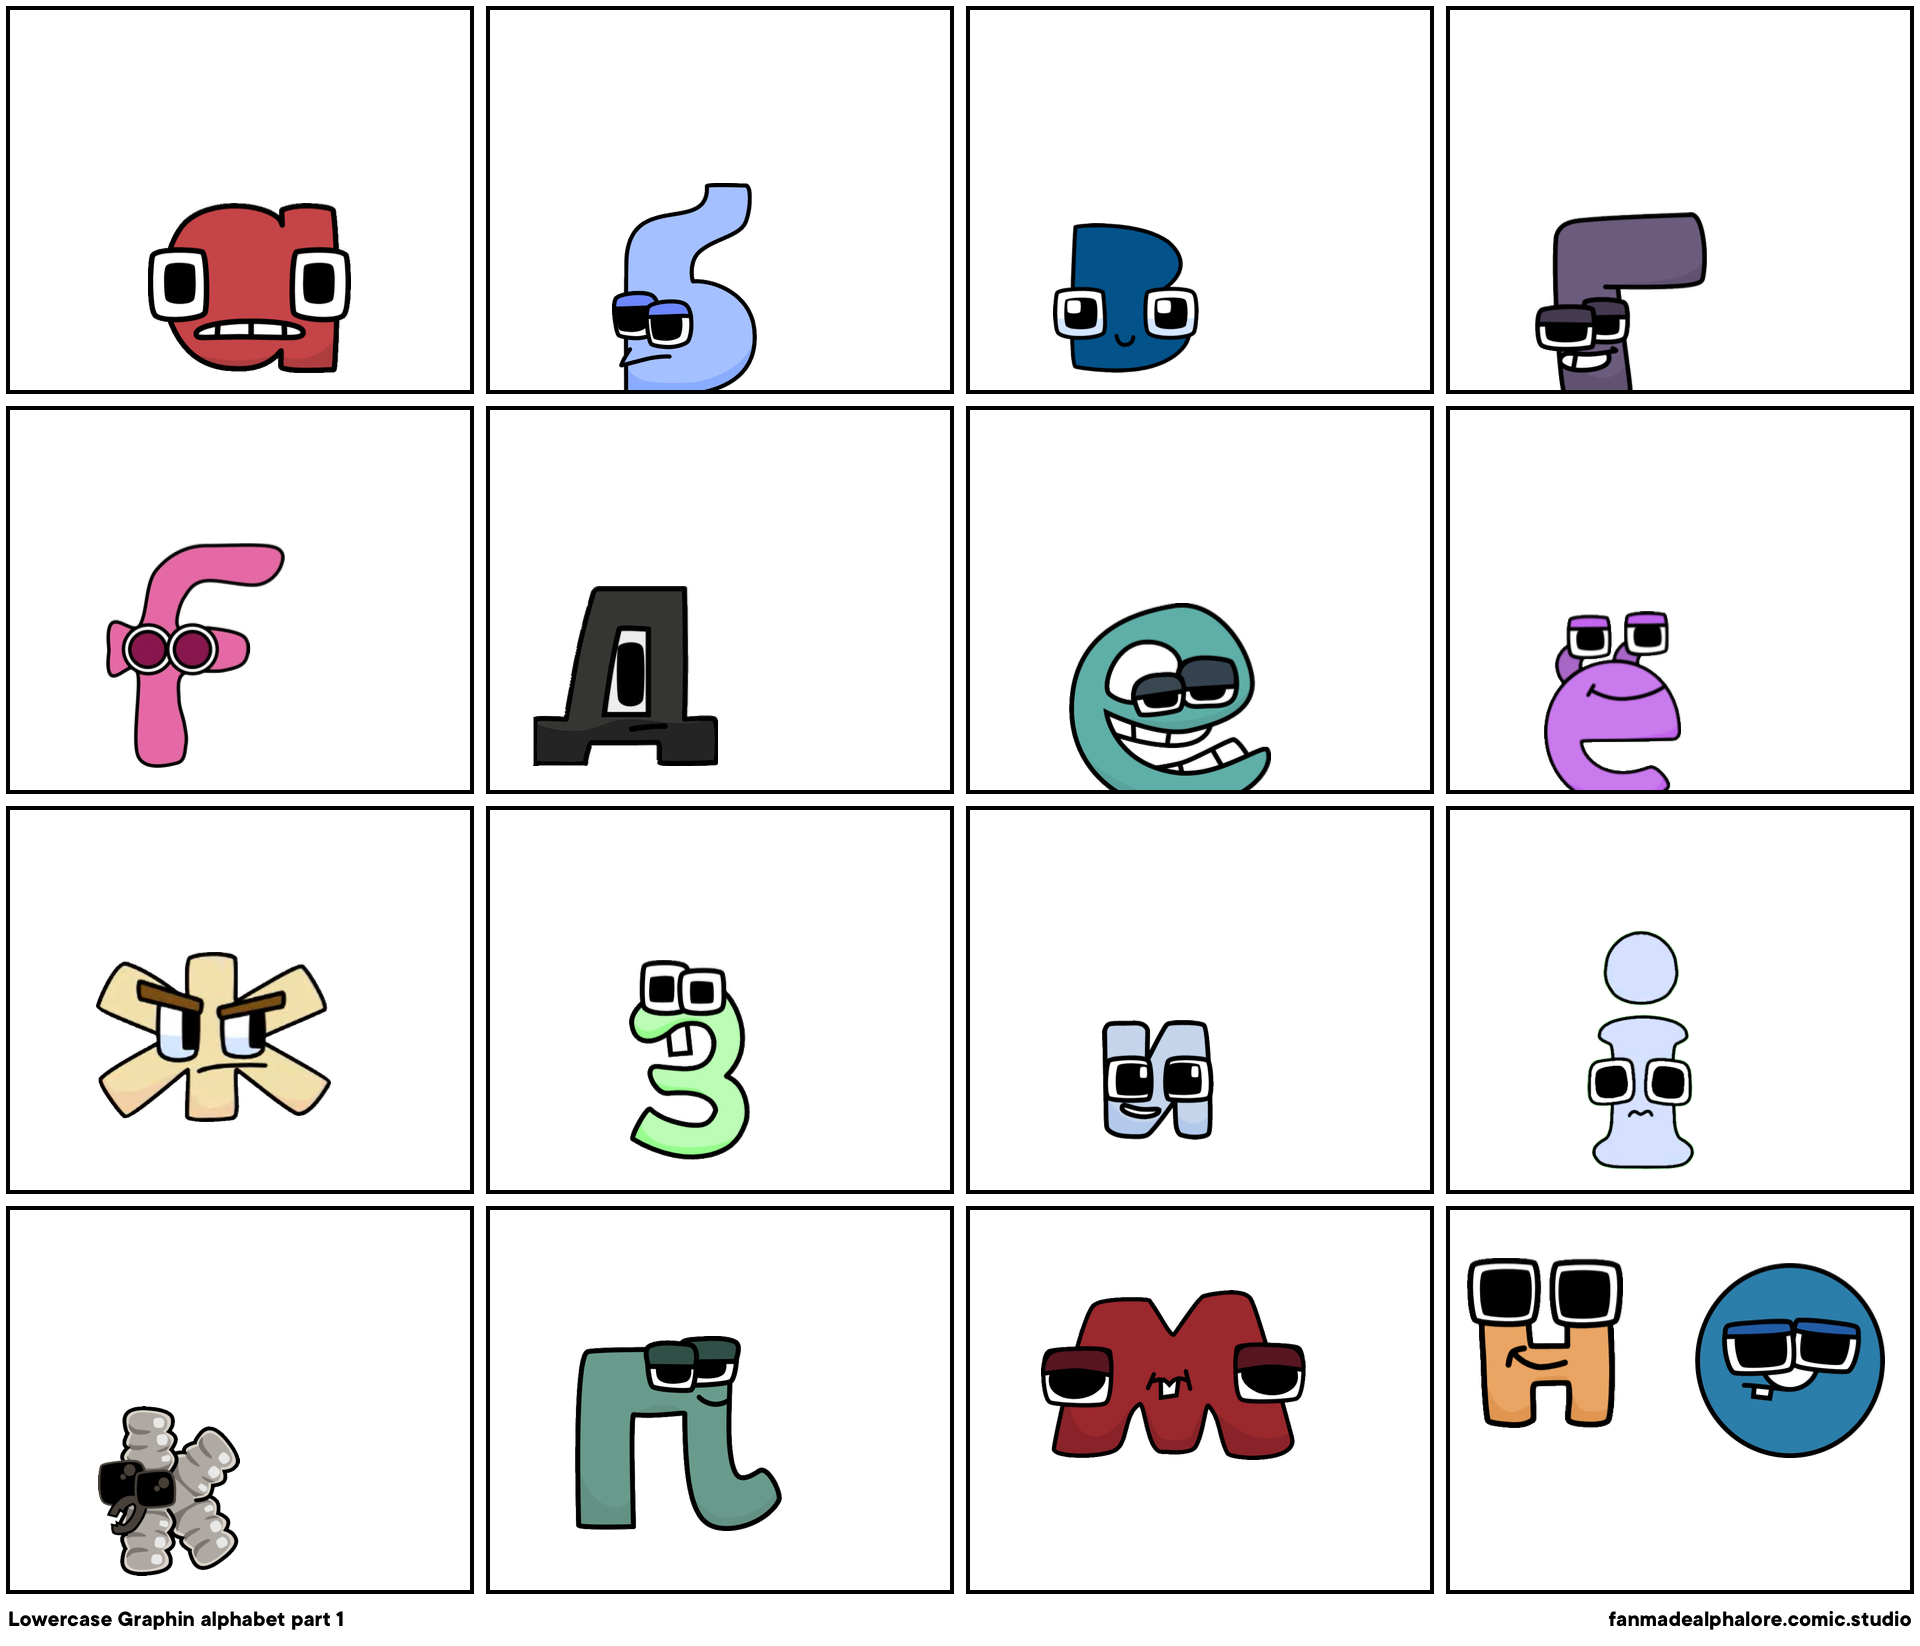 New Alphabet Lore (A-G) Part 1 - Comic Studio